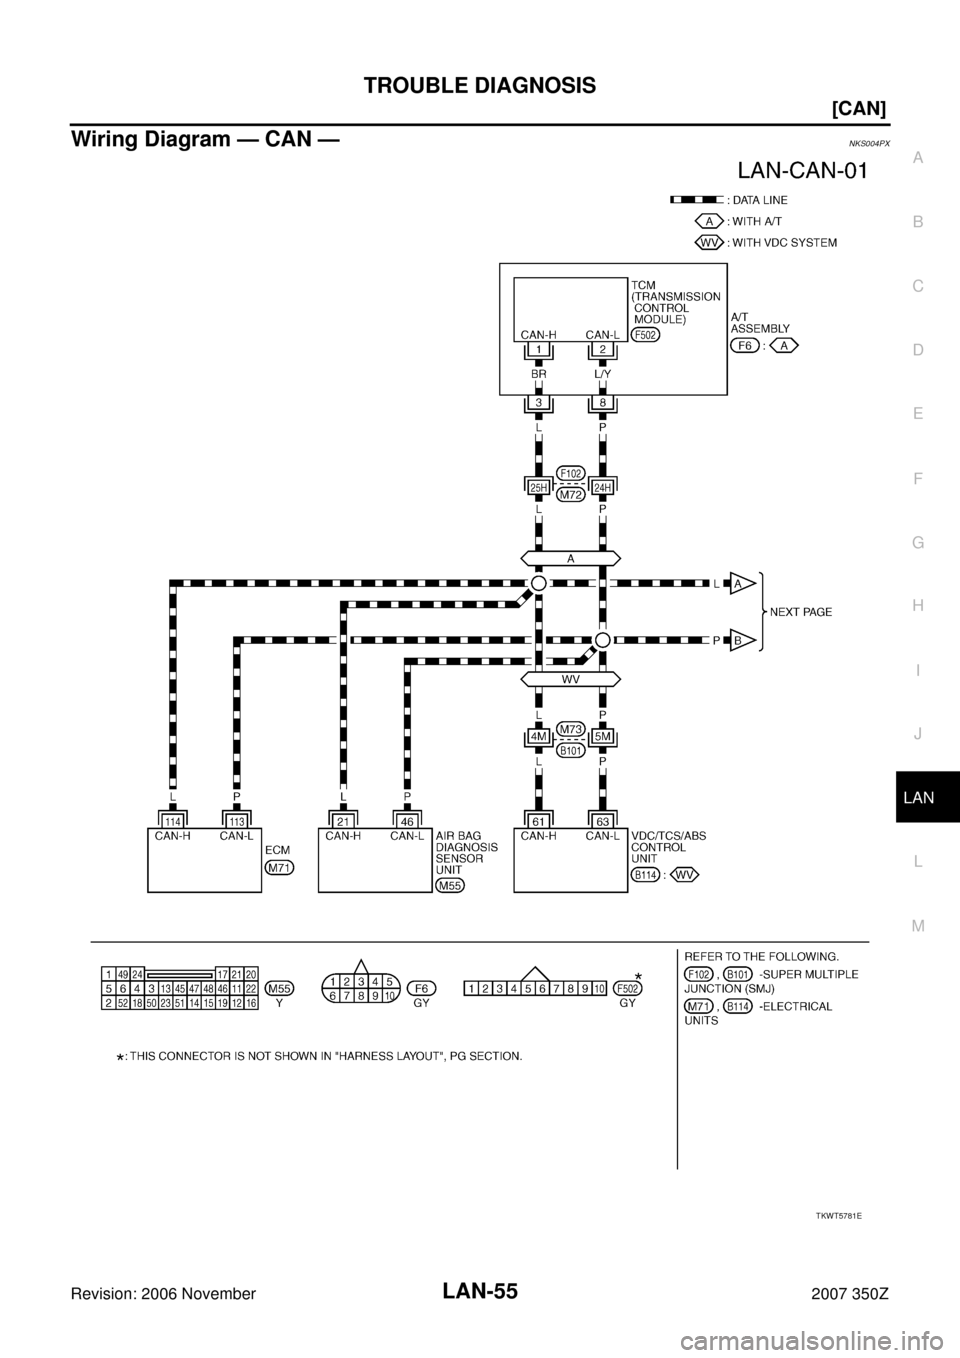 NISSAN 350Z 2007 Z33 LAN System Repair Manual TROUBLE DIAGNOSIS
LAN-55
[CAN]
C
D
E
F
G
H
I
J
L
MA
B
LAN
Revision: 2006 November2007 350Z
Wiring Diagram — CAN —NKS004PX
TKWT5781E 